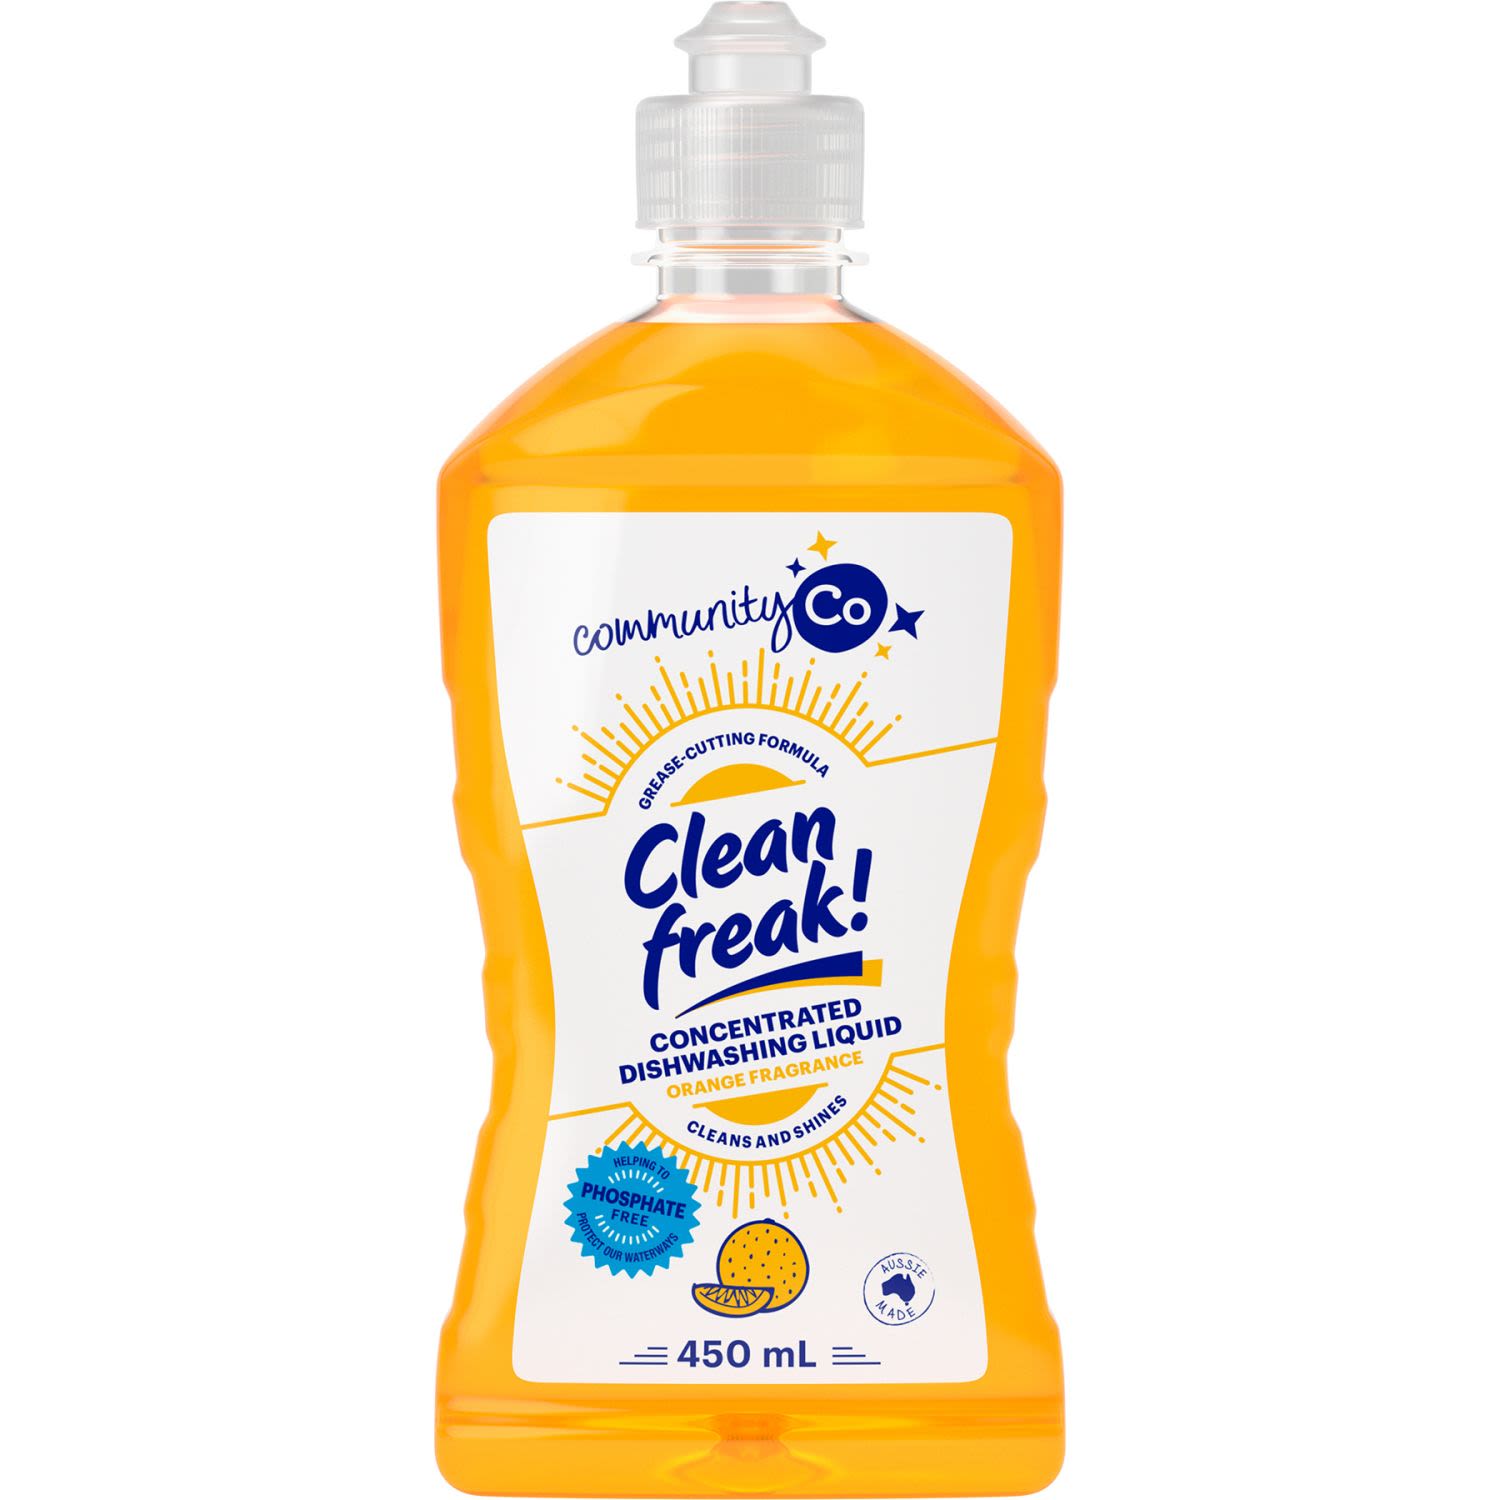 Community Co Clean Freak Dishwashing Liquid Original, 450 Millilitre